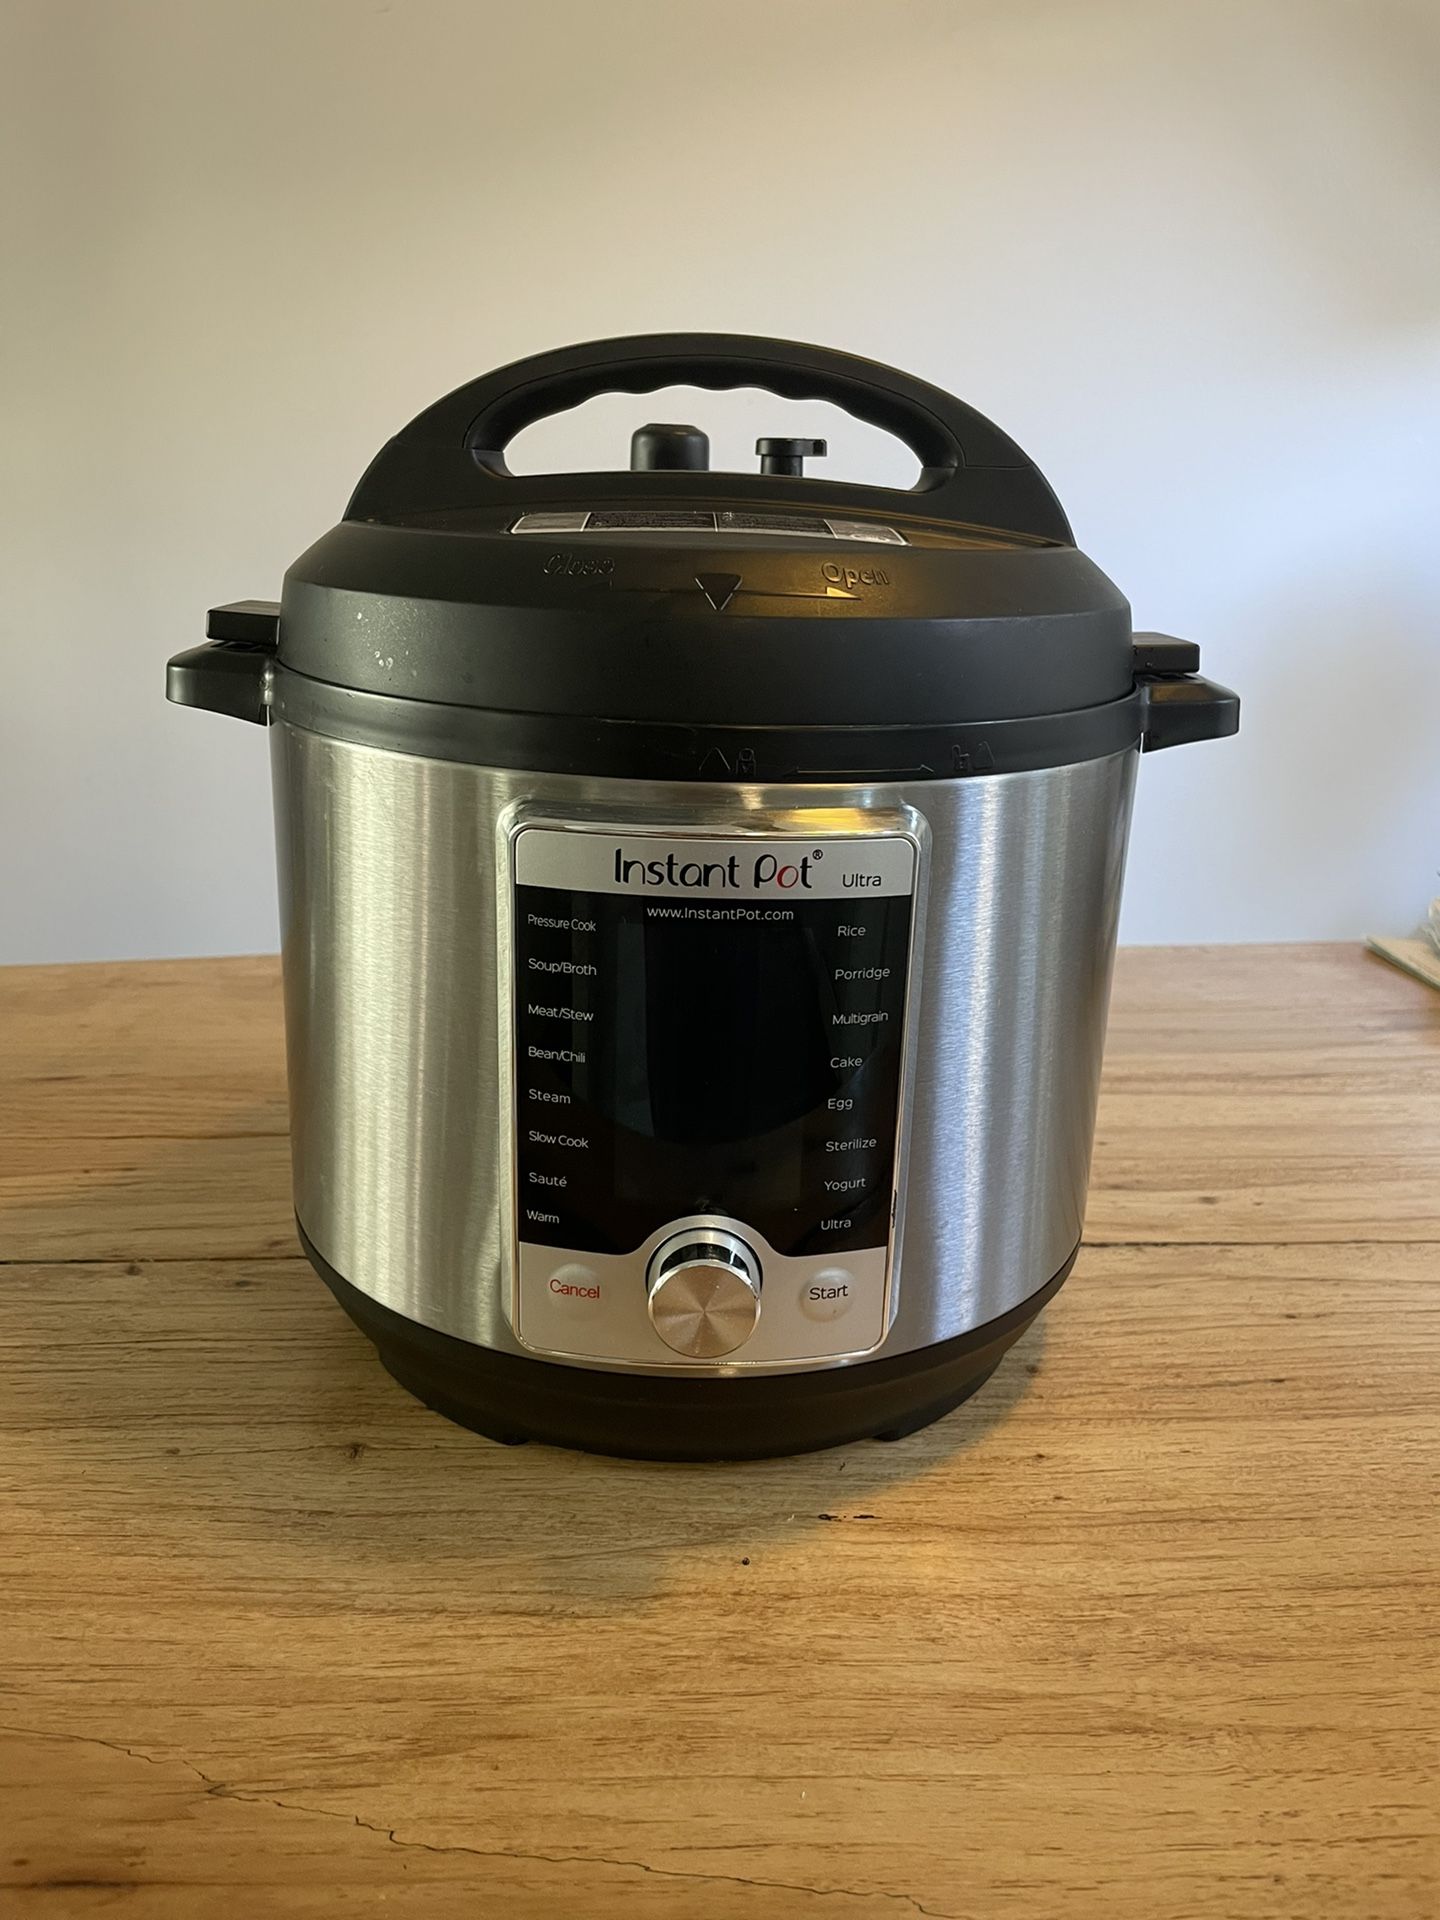 t fal pressure cooker 6QT for Sale in Rialto, CA - OfferUp